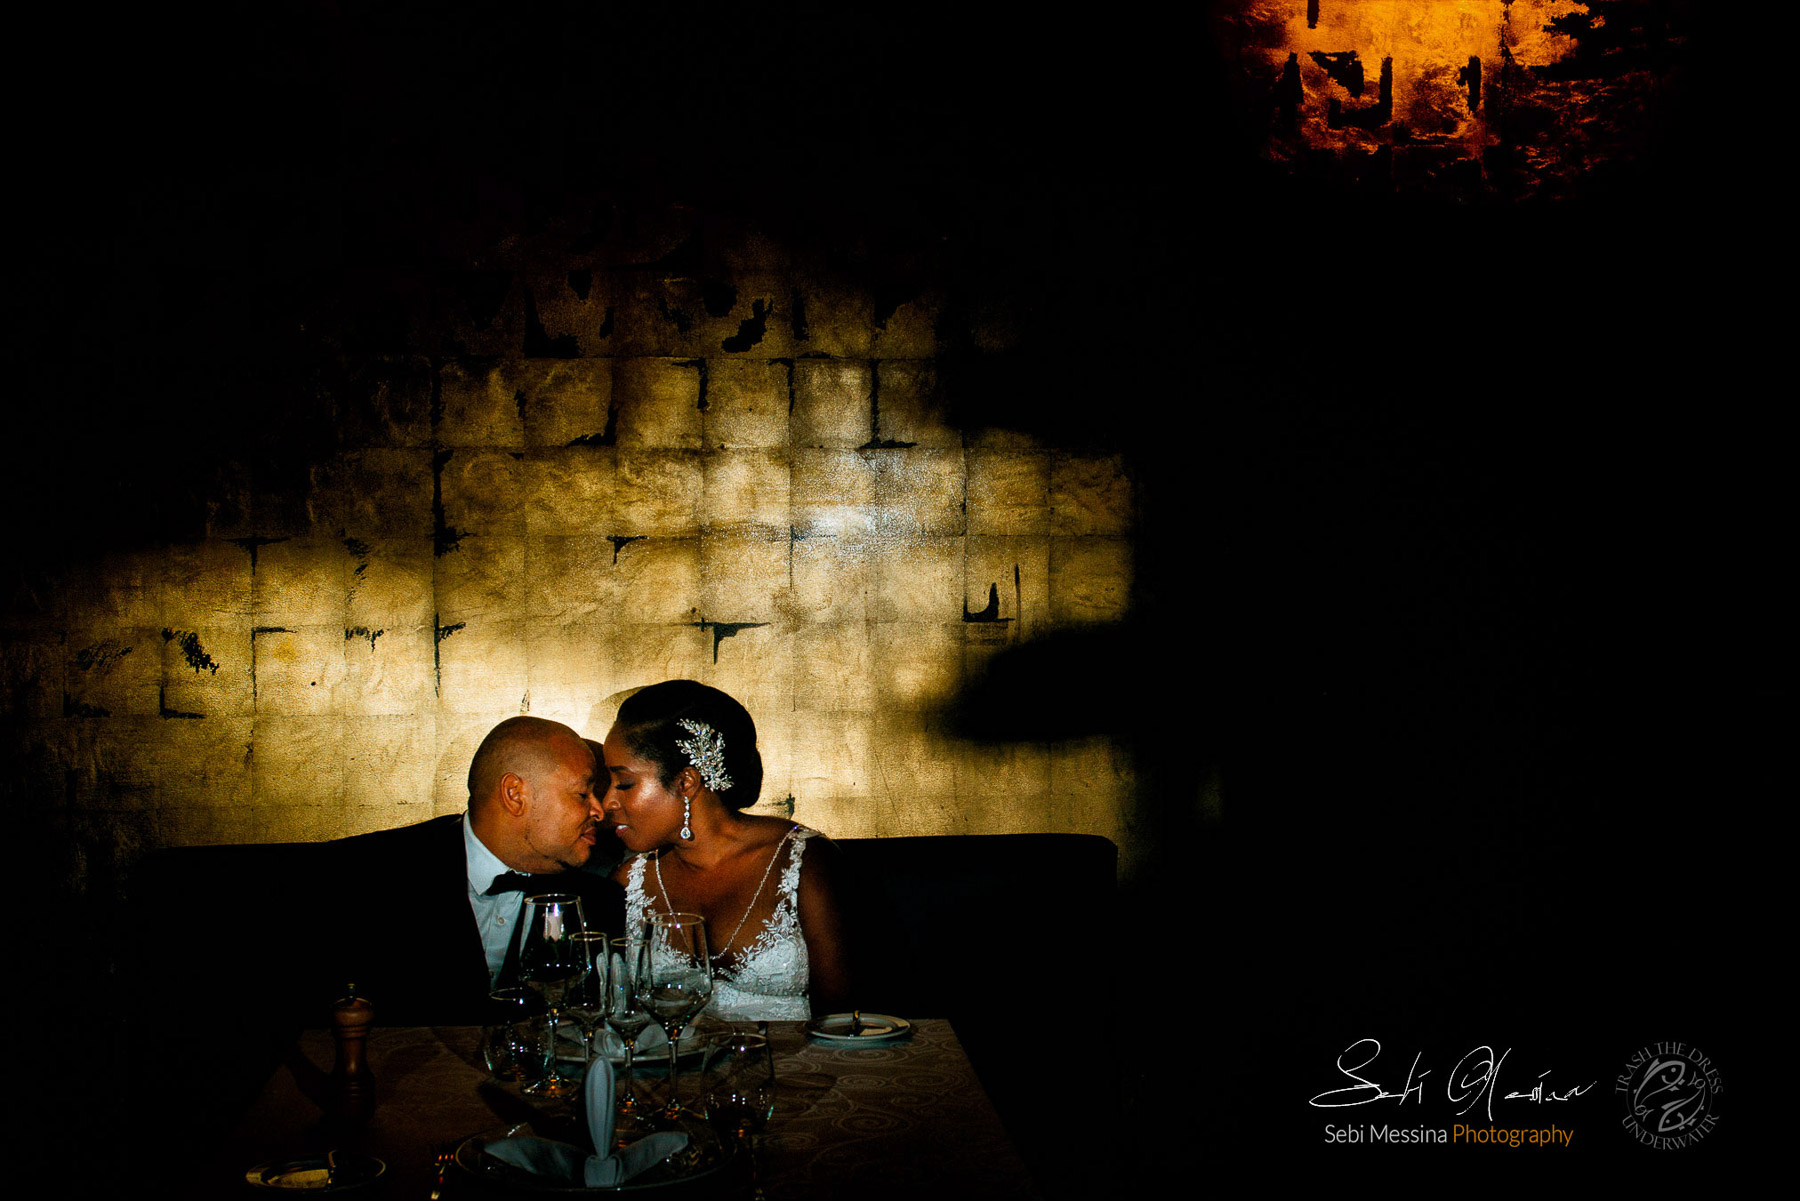 Black destination brides - Sebi Messina Photography